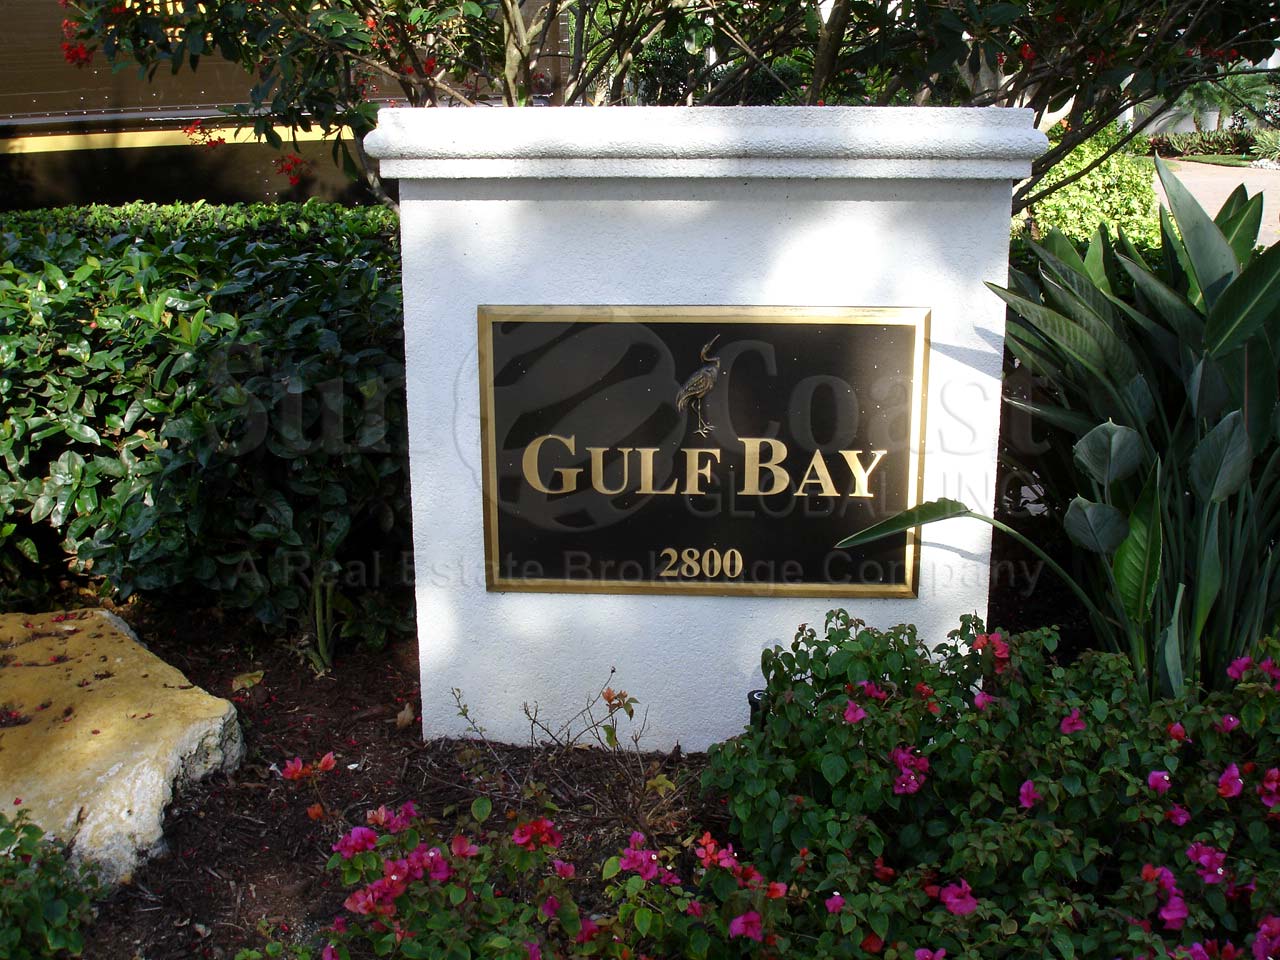 Gulf Bay Apartments Signage